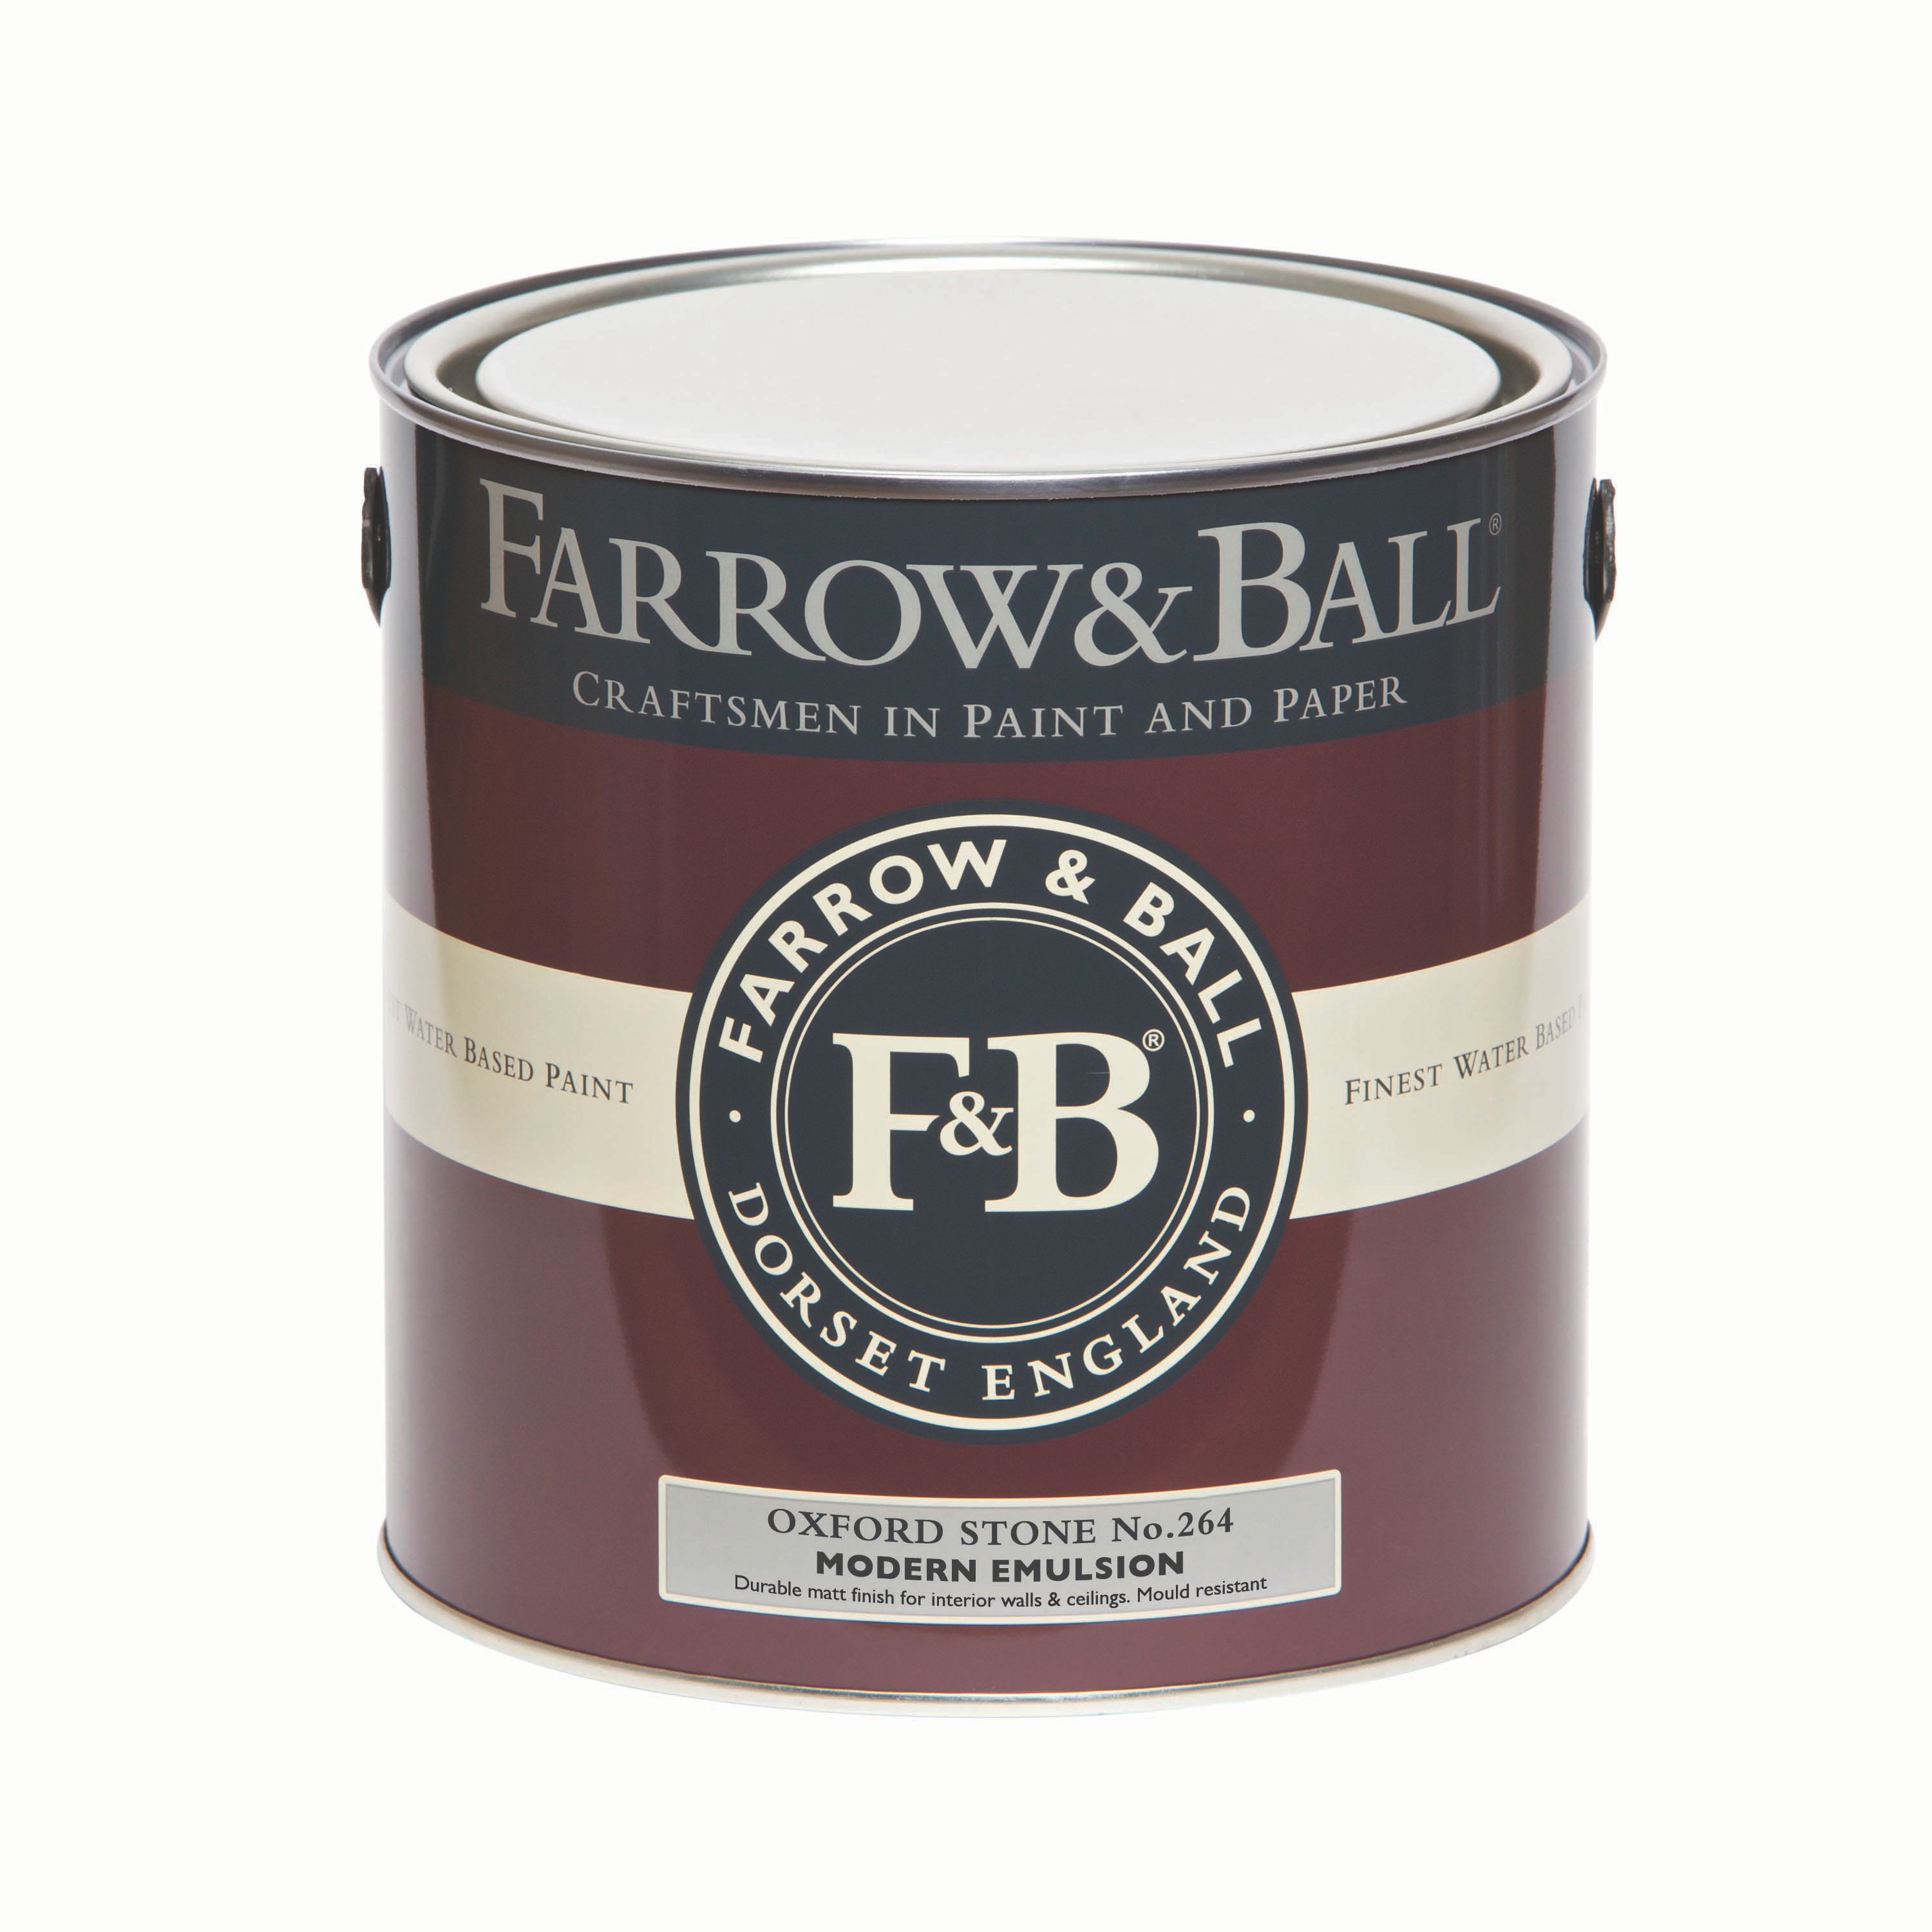 Farrow & Ball Modern Oxford stone No.264 Matt Emulsion paint, 2.5L